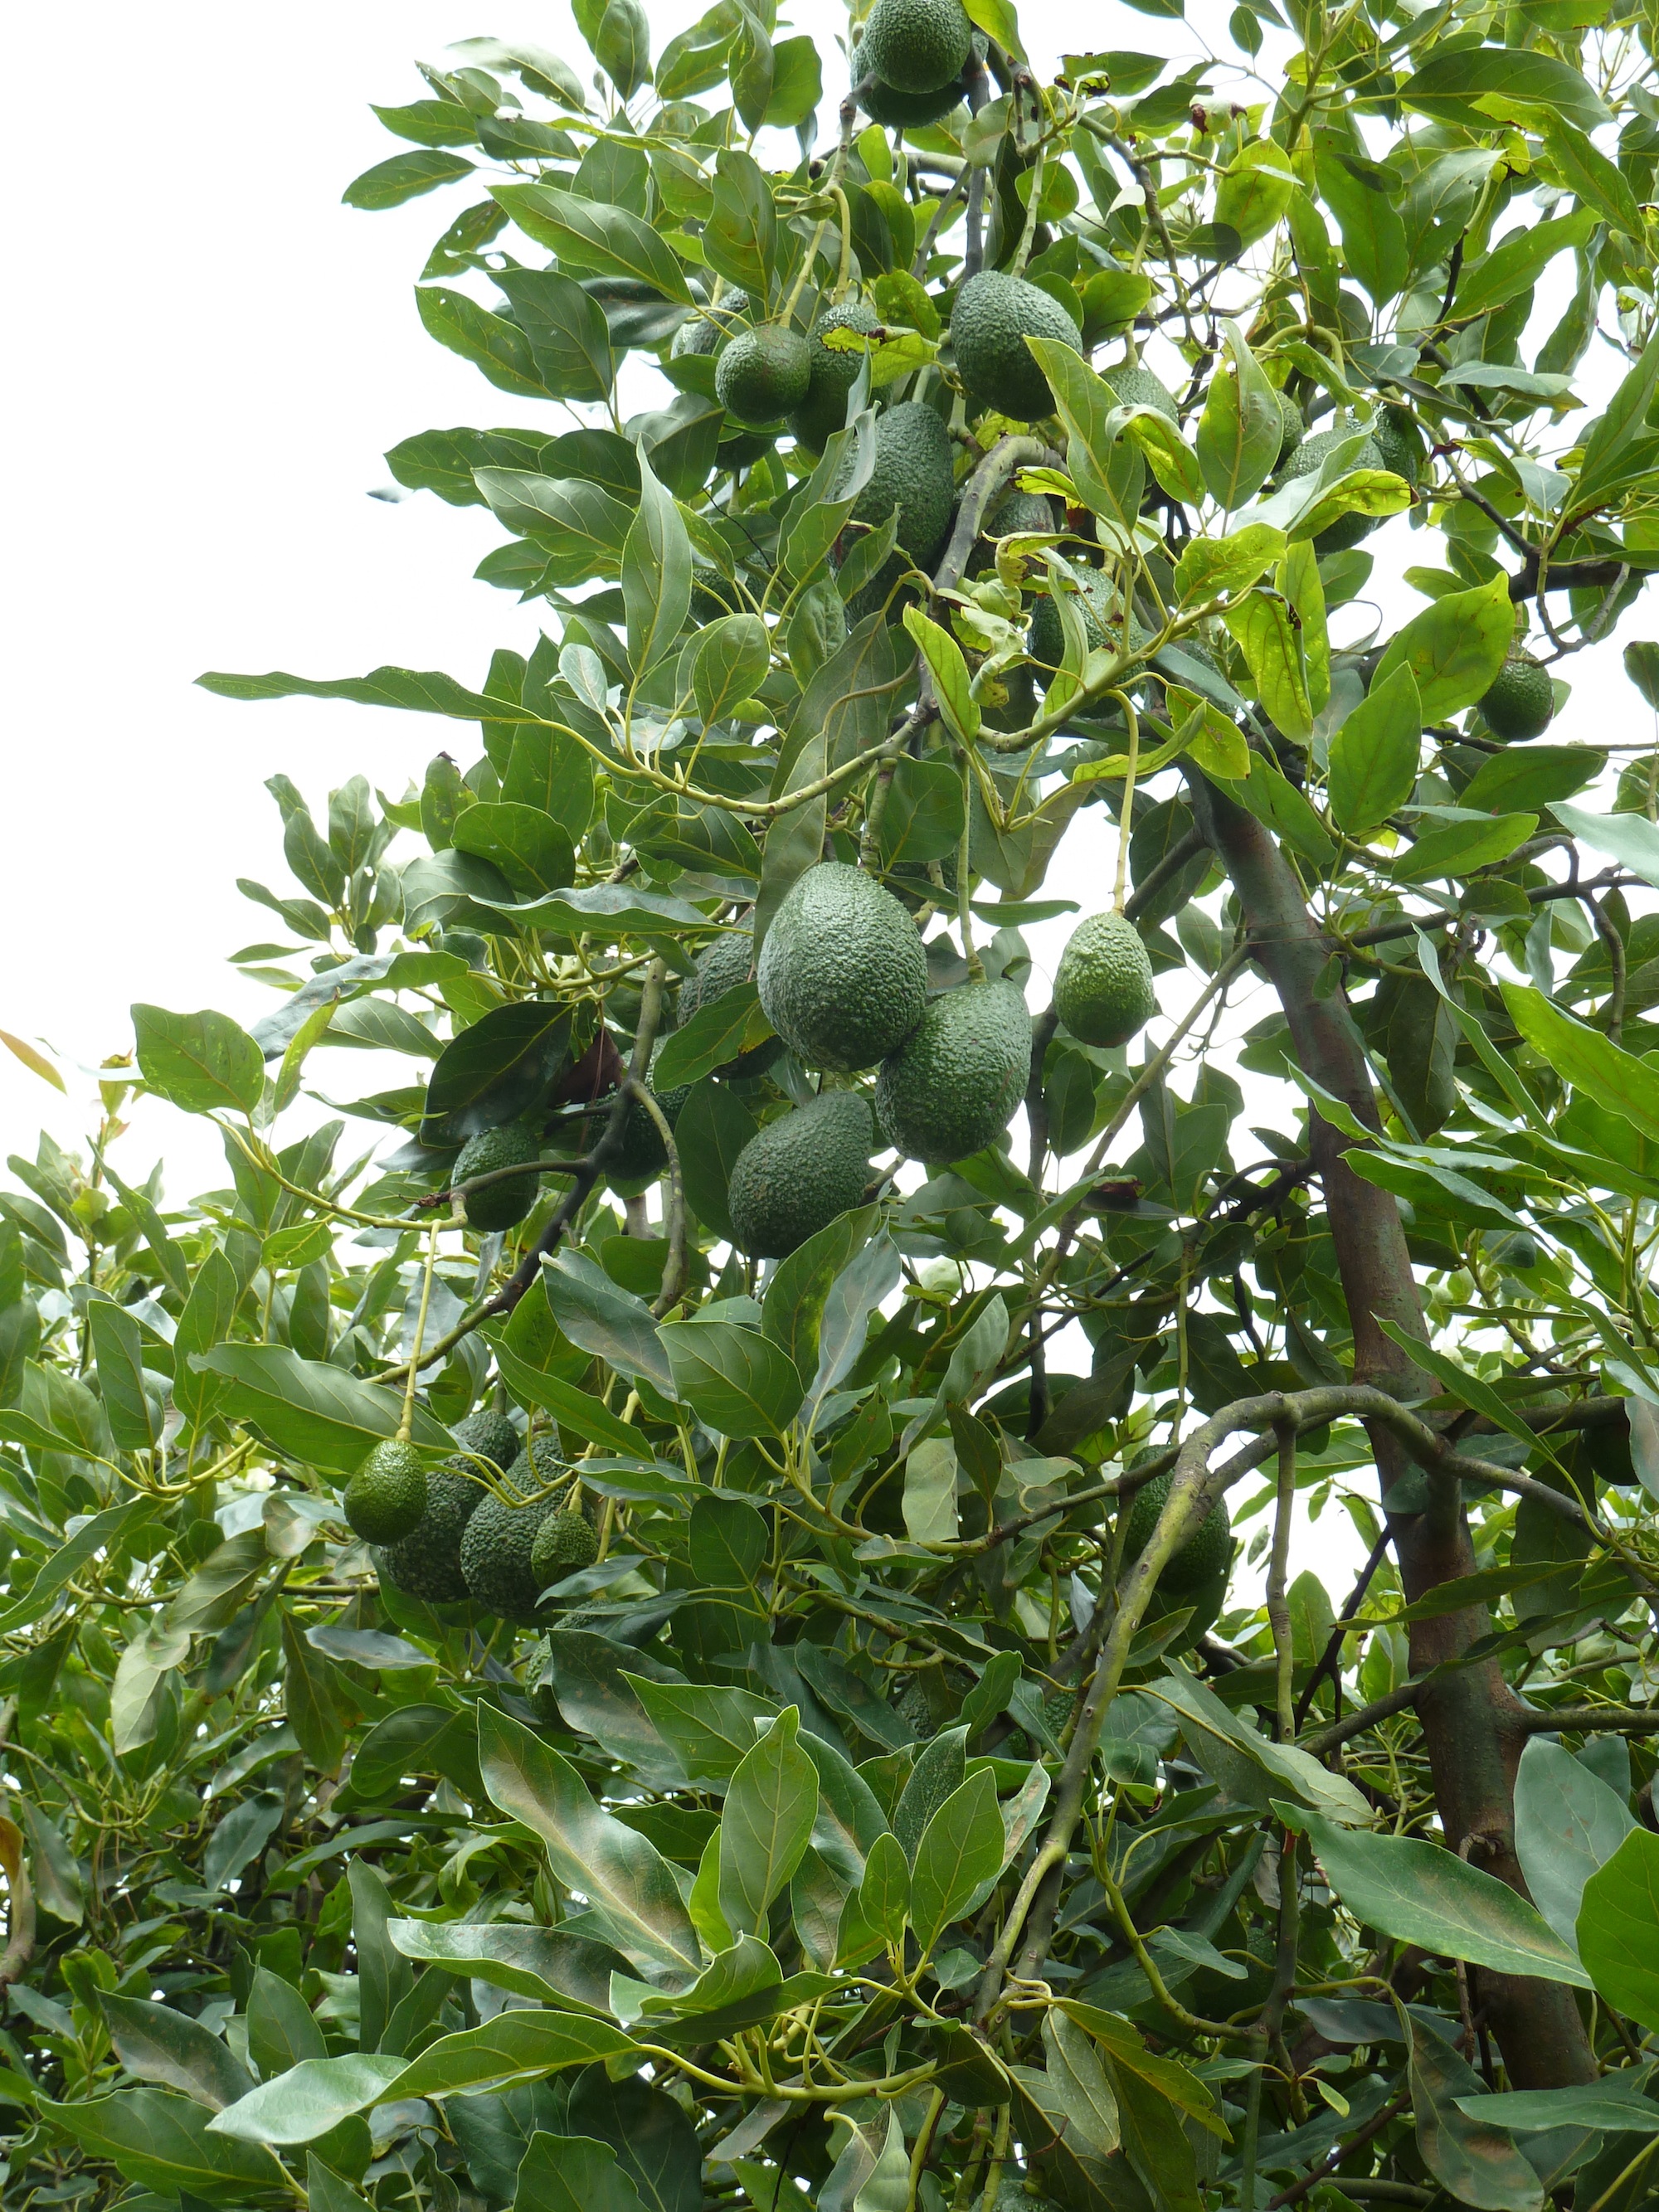 avocado farmers - organic media network - organic avocados - avocado farms - organic farming